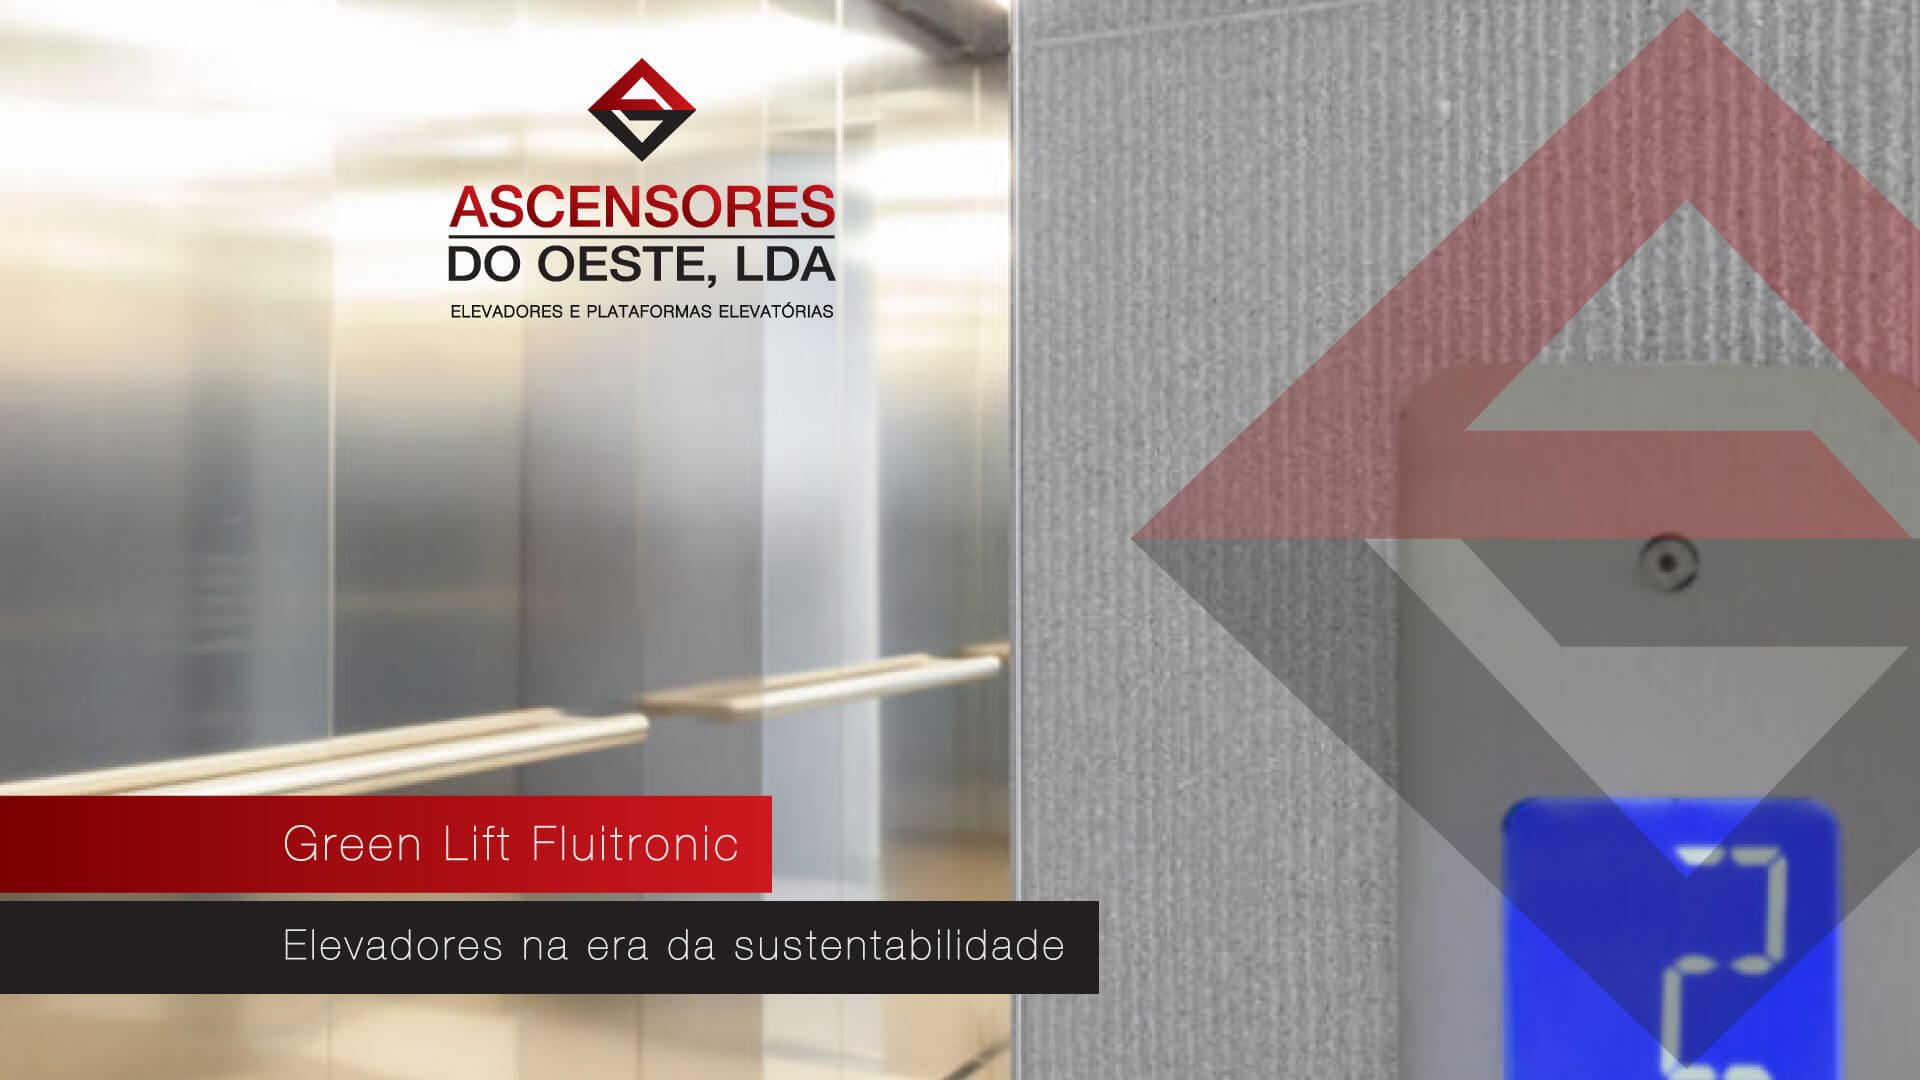 Green Lift Fluitronic - elevadores na era da sustentabilidade